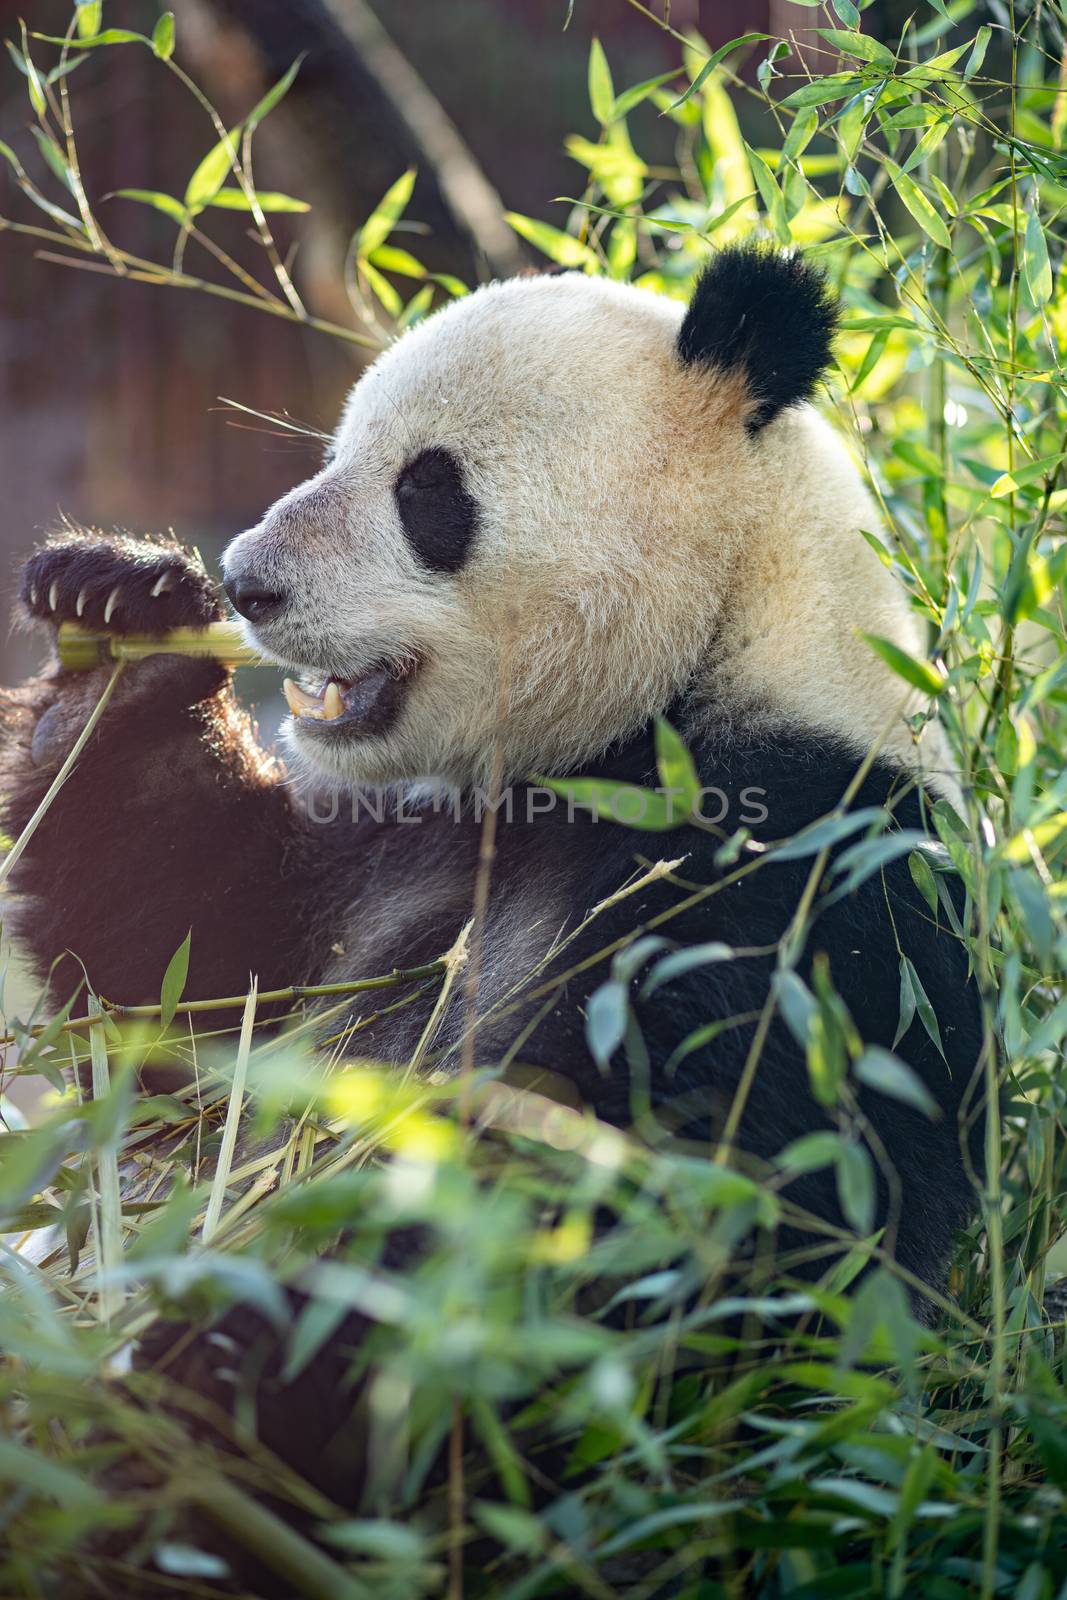 Copenhagen, Denmark - January 04, 2020: A panda eating bambus in the outdoor area in Copenhagen Zoo